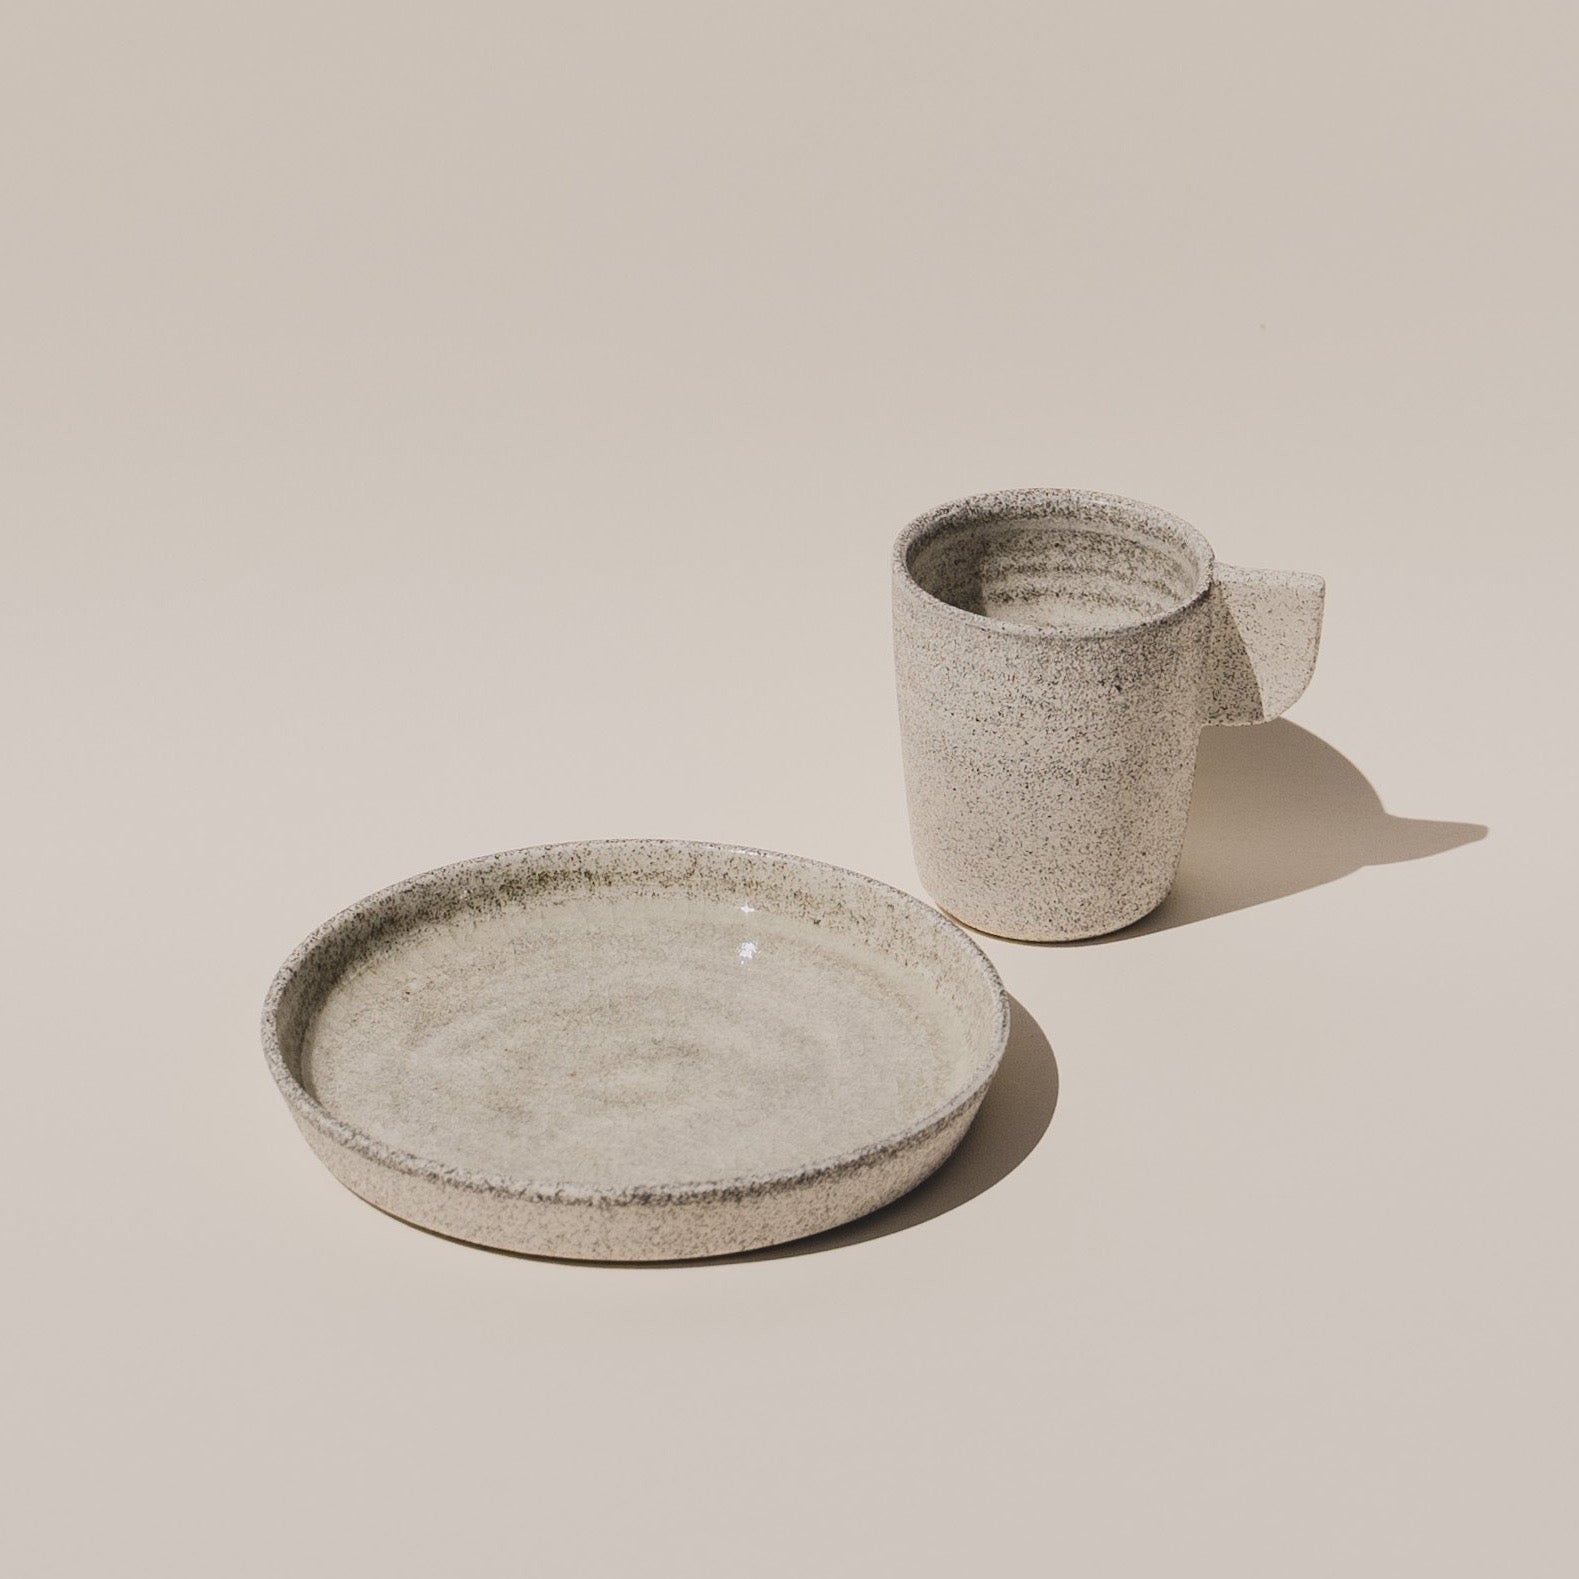 Speckled Grey Ceramic Plate with matching ceramic mug